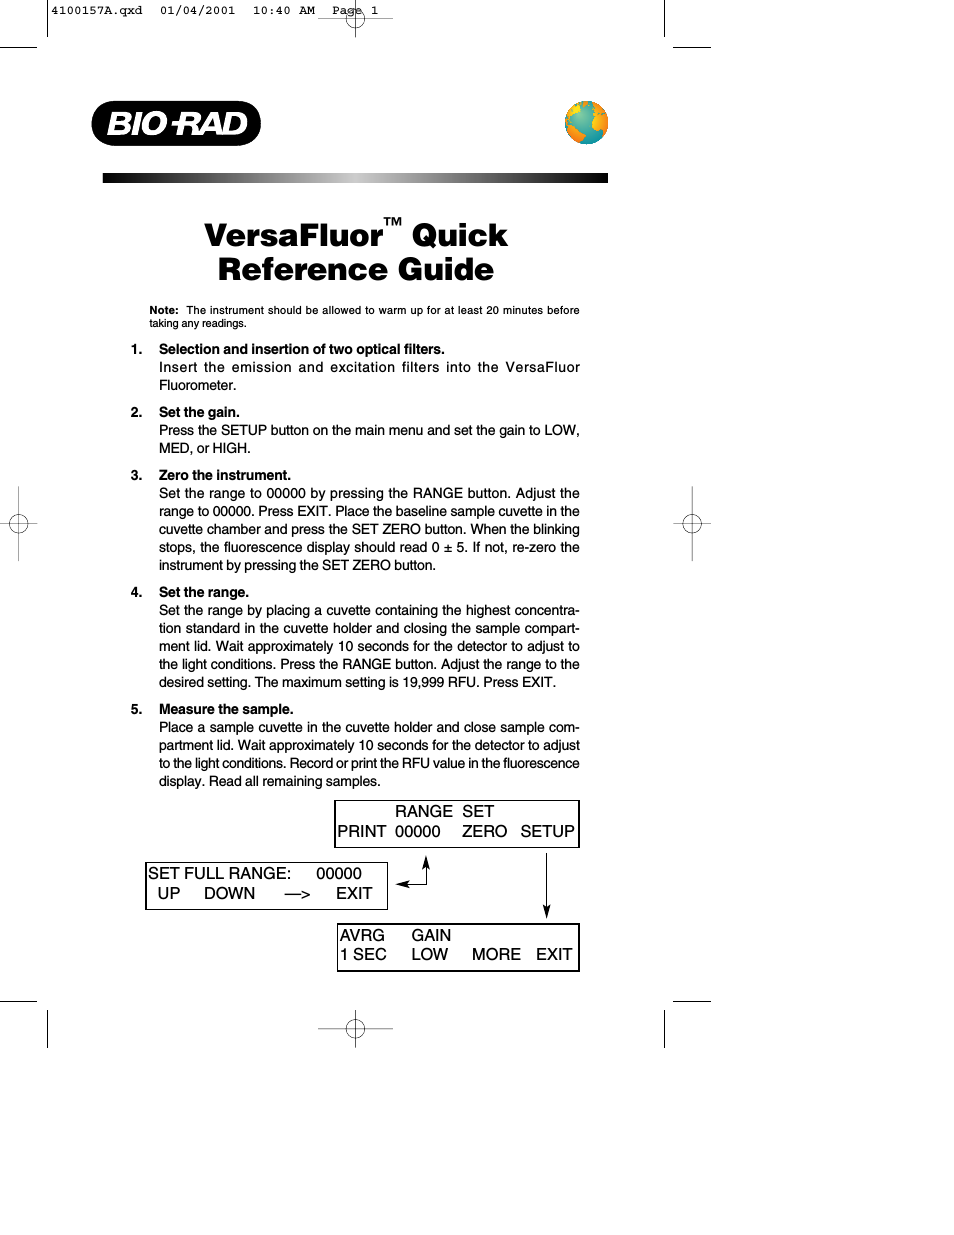 VersaFluor™ Fluorometer